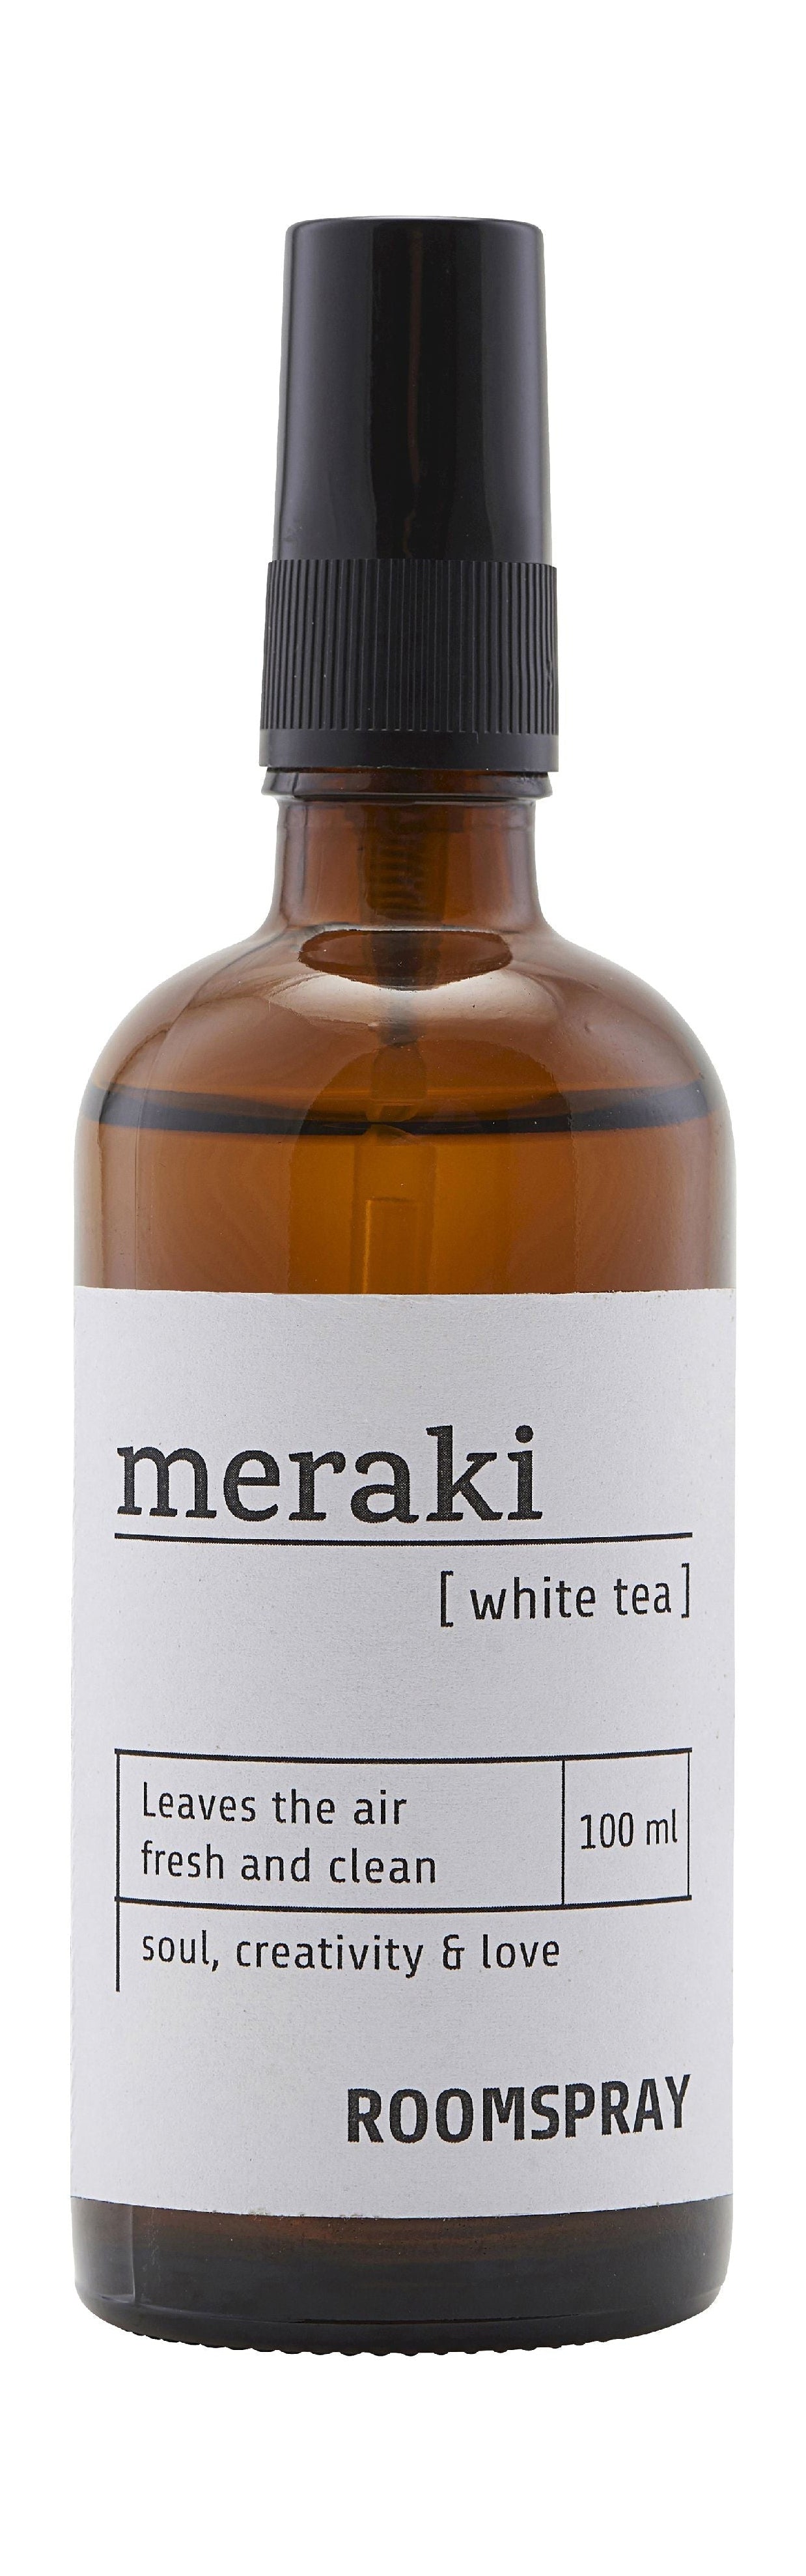 Spray de chambre Meraki 100 ml, thé blanc